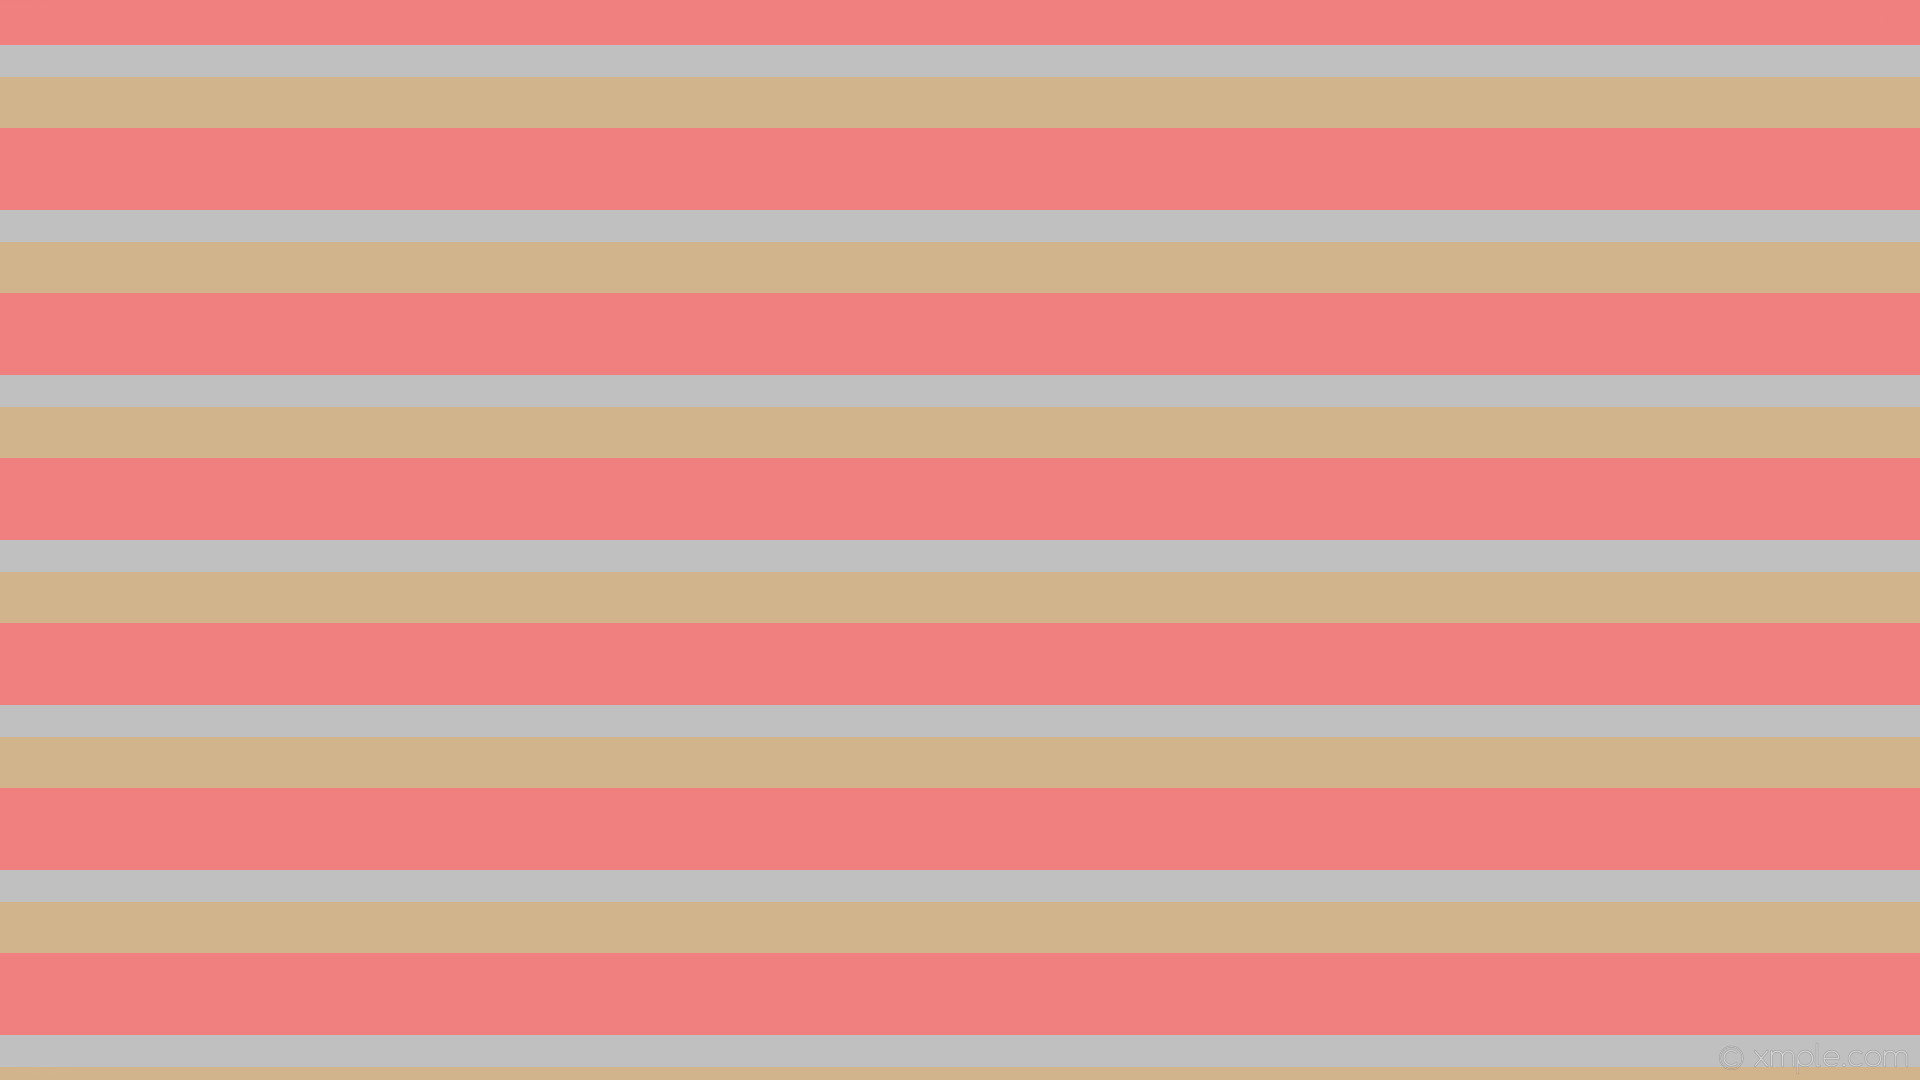 1920x1080 wallpaper streaks grey stripes red brown lines silver tan light coral  #c0c0c0 #d2b48c #